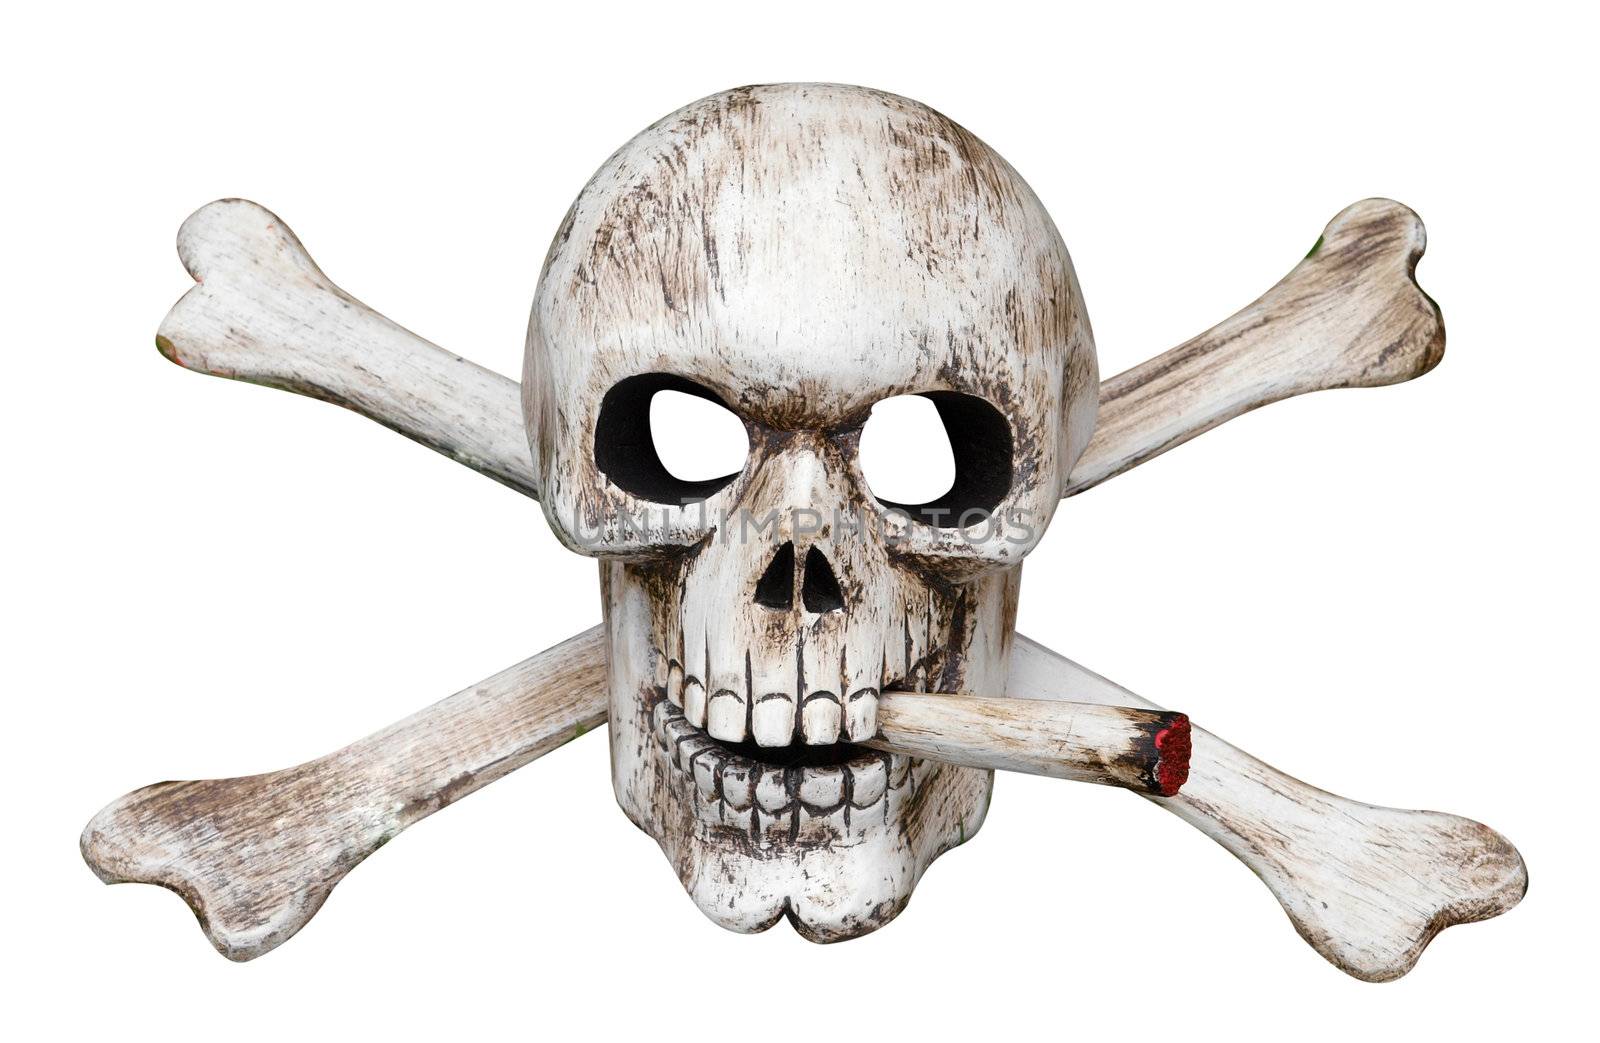 Skull and Cross Bones with Cigarette  by MargoJH